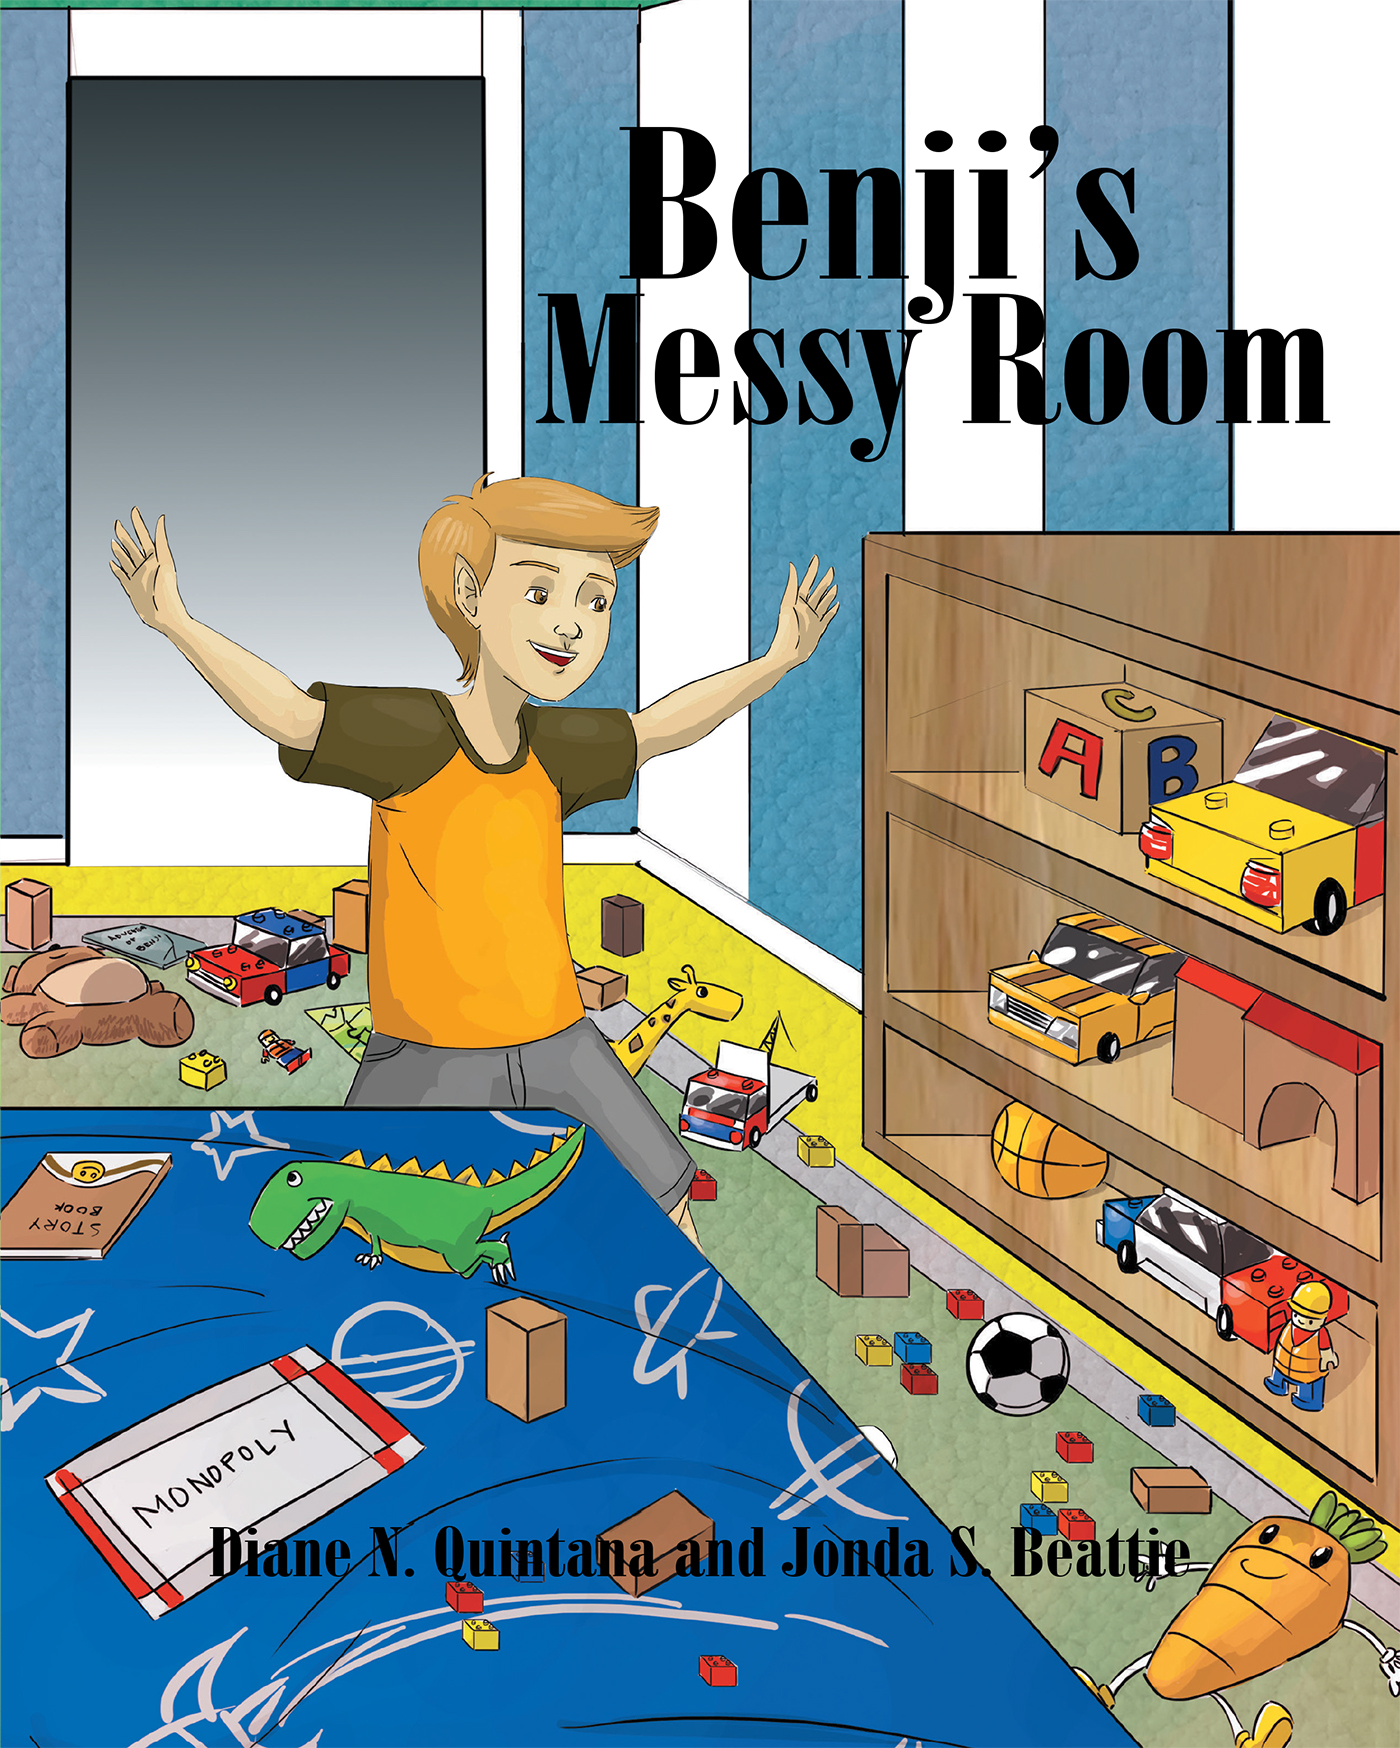 Benji's Messy Room Cover Image